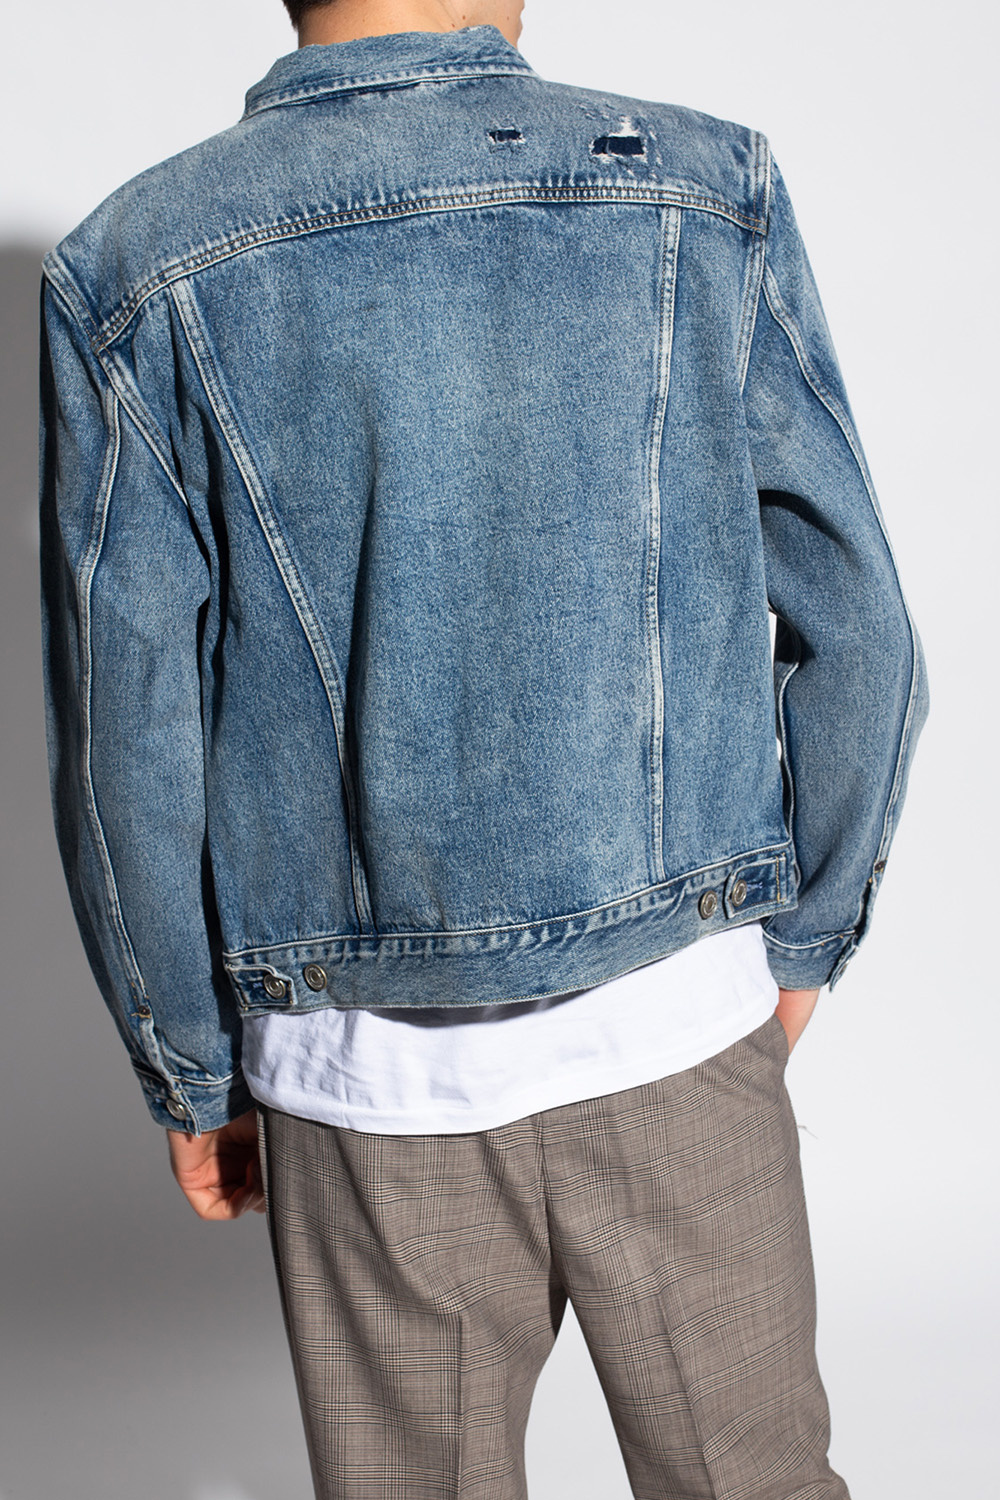 AllSaints ‘Delta’ stonewashed denim jacket